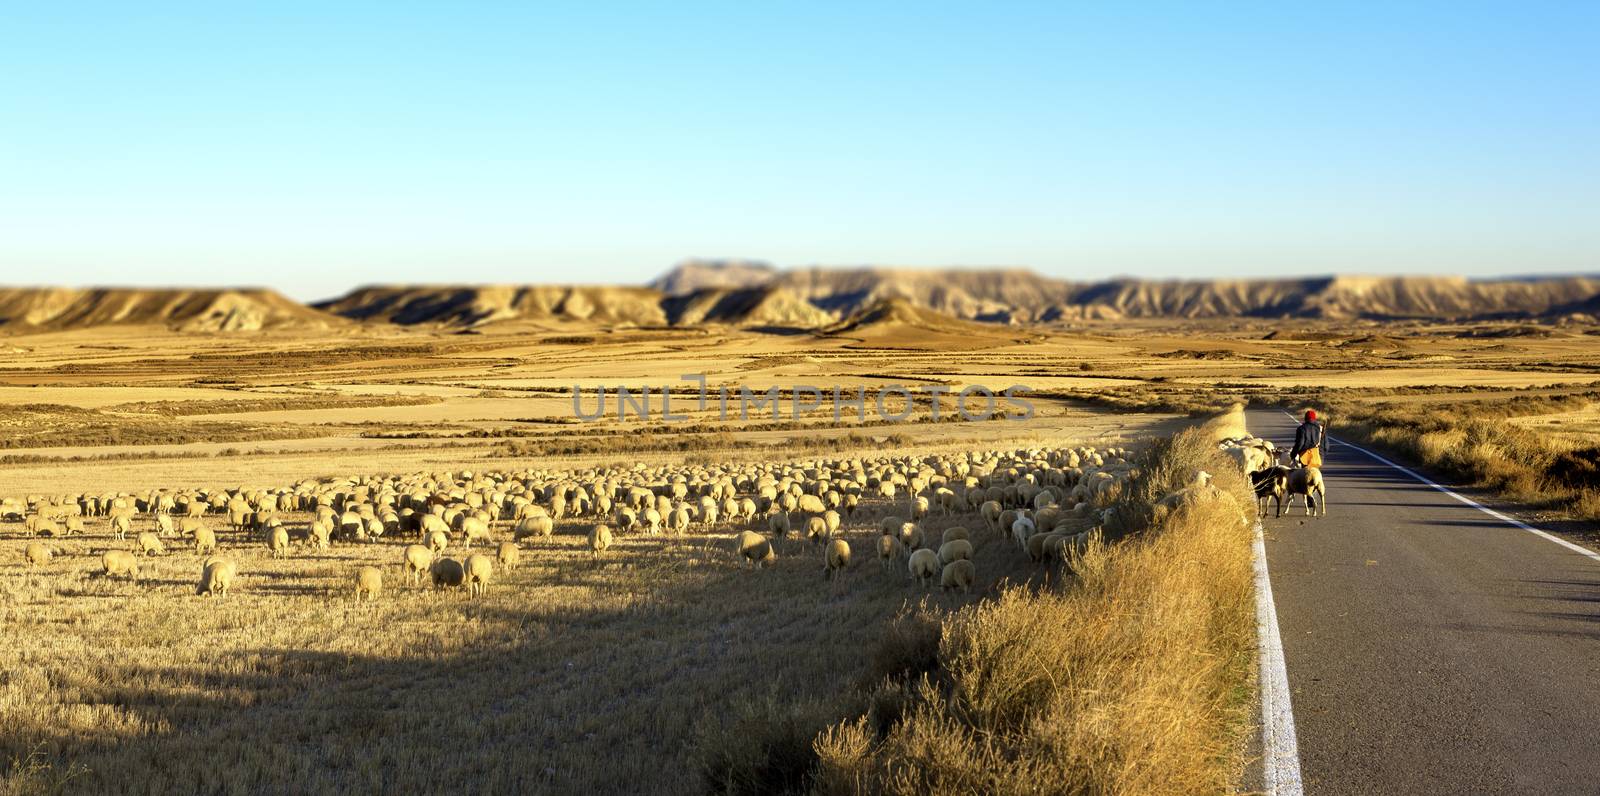 Shepherd and flock of sheep by carloscastilla